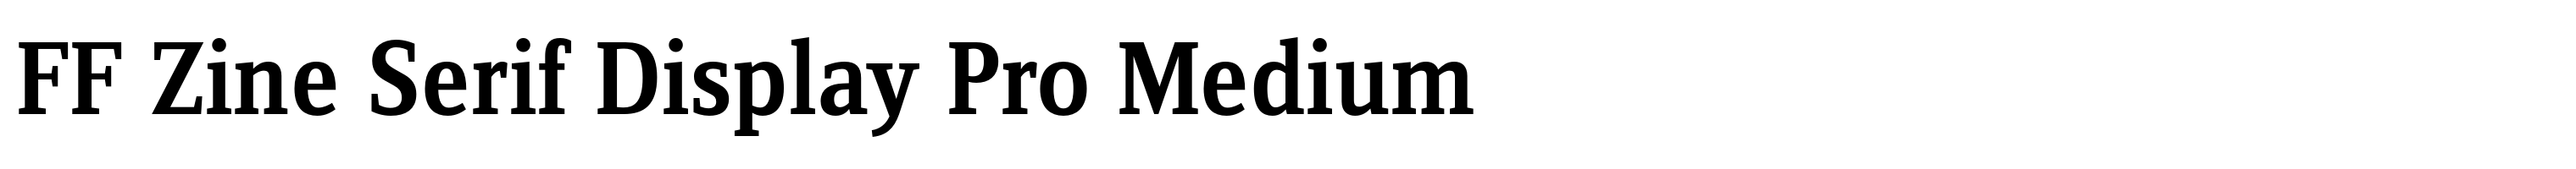 FF Zine Serif Display Pro Medium